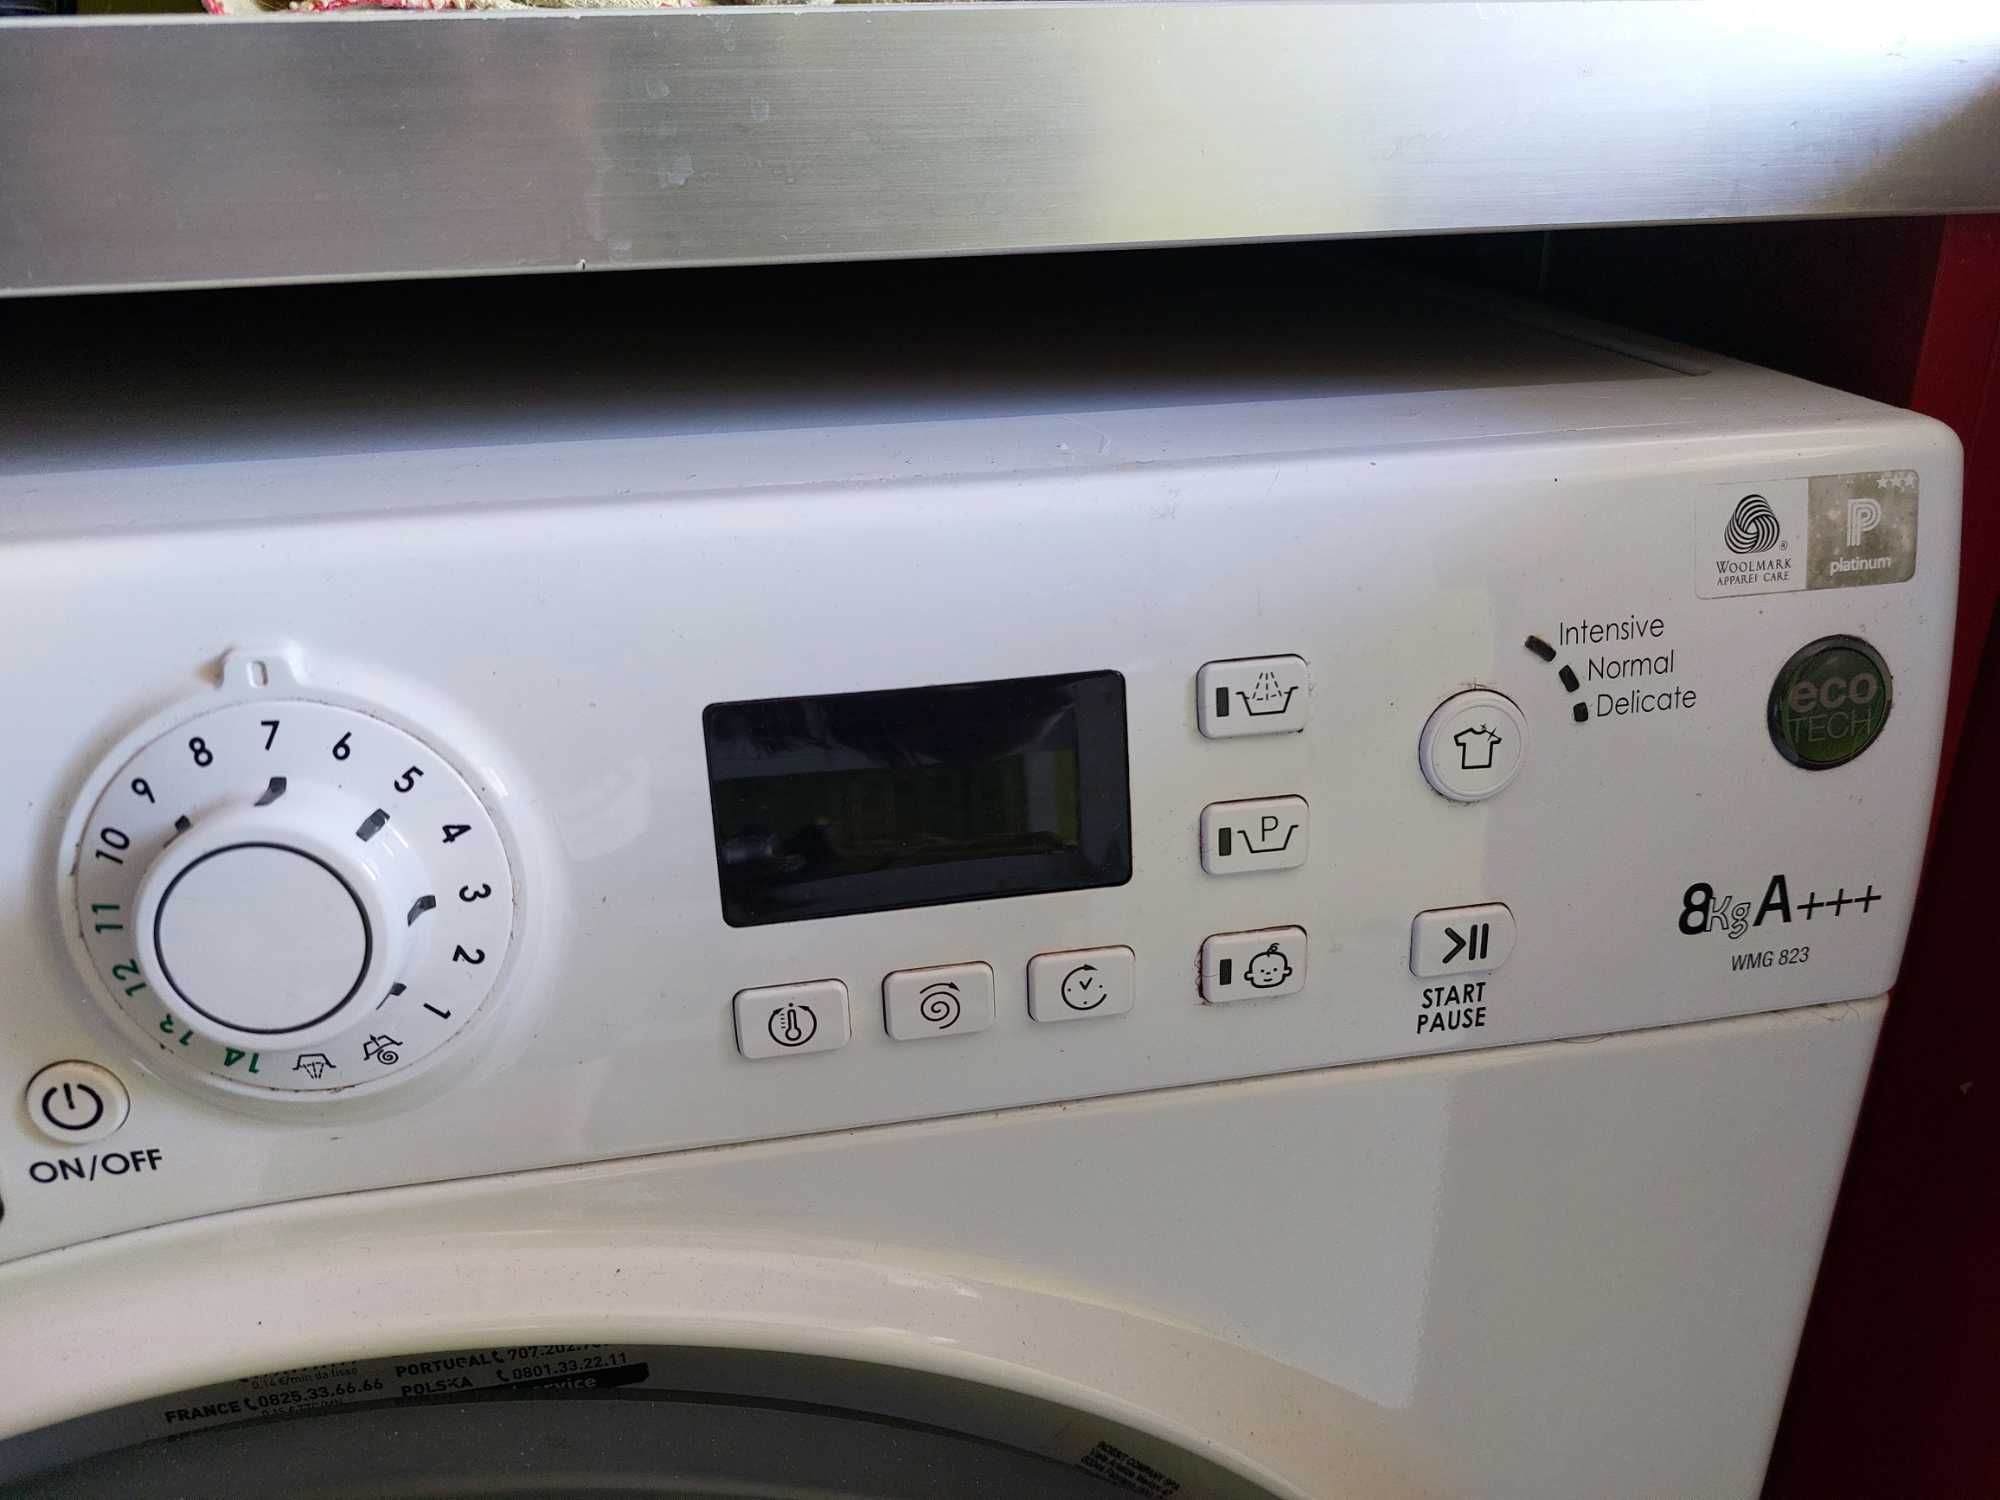 Vendo máquina de lavar roupa ariston